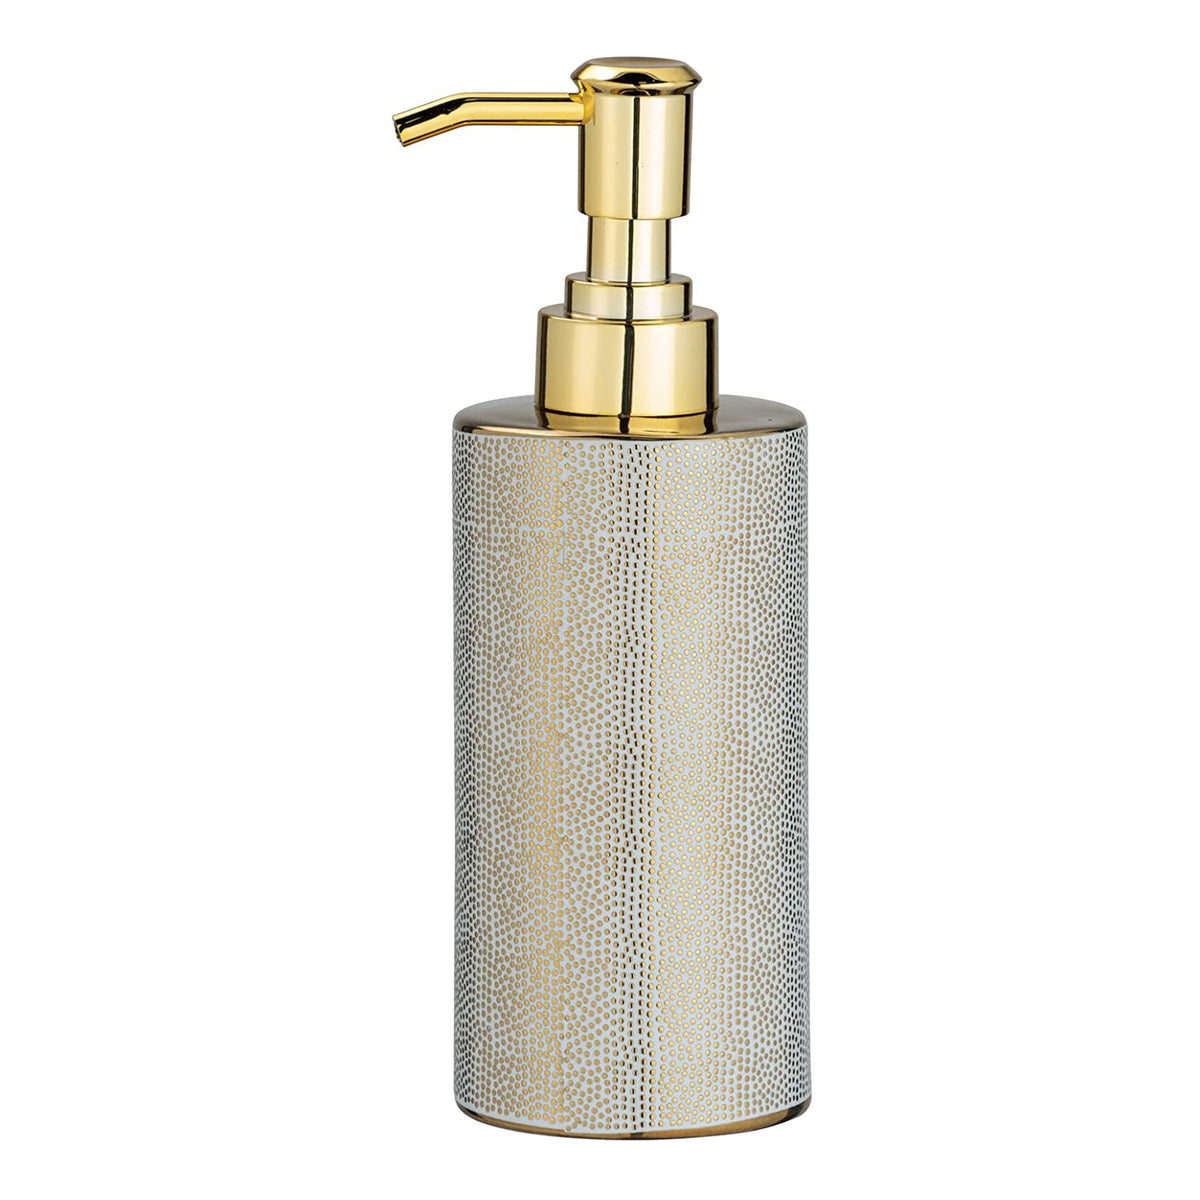 Liquid soap dispenser, Gold